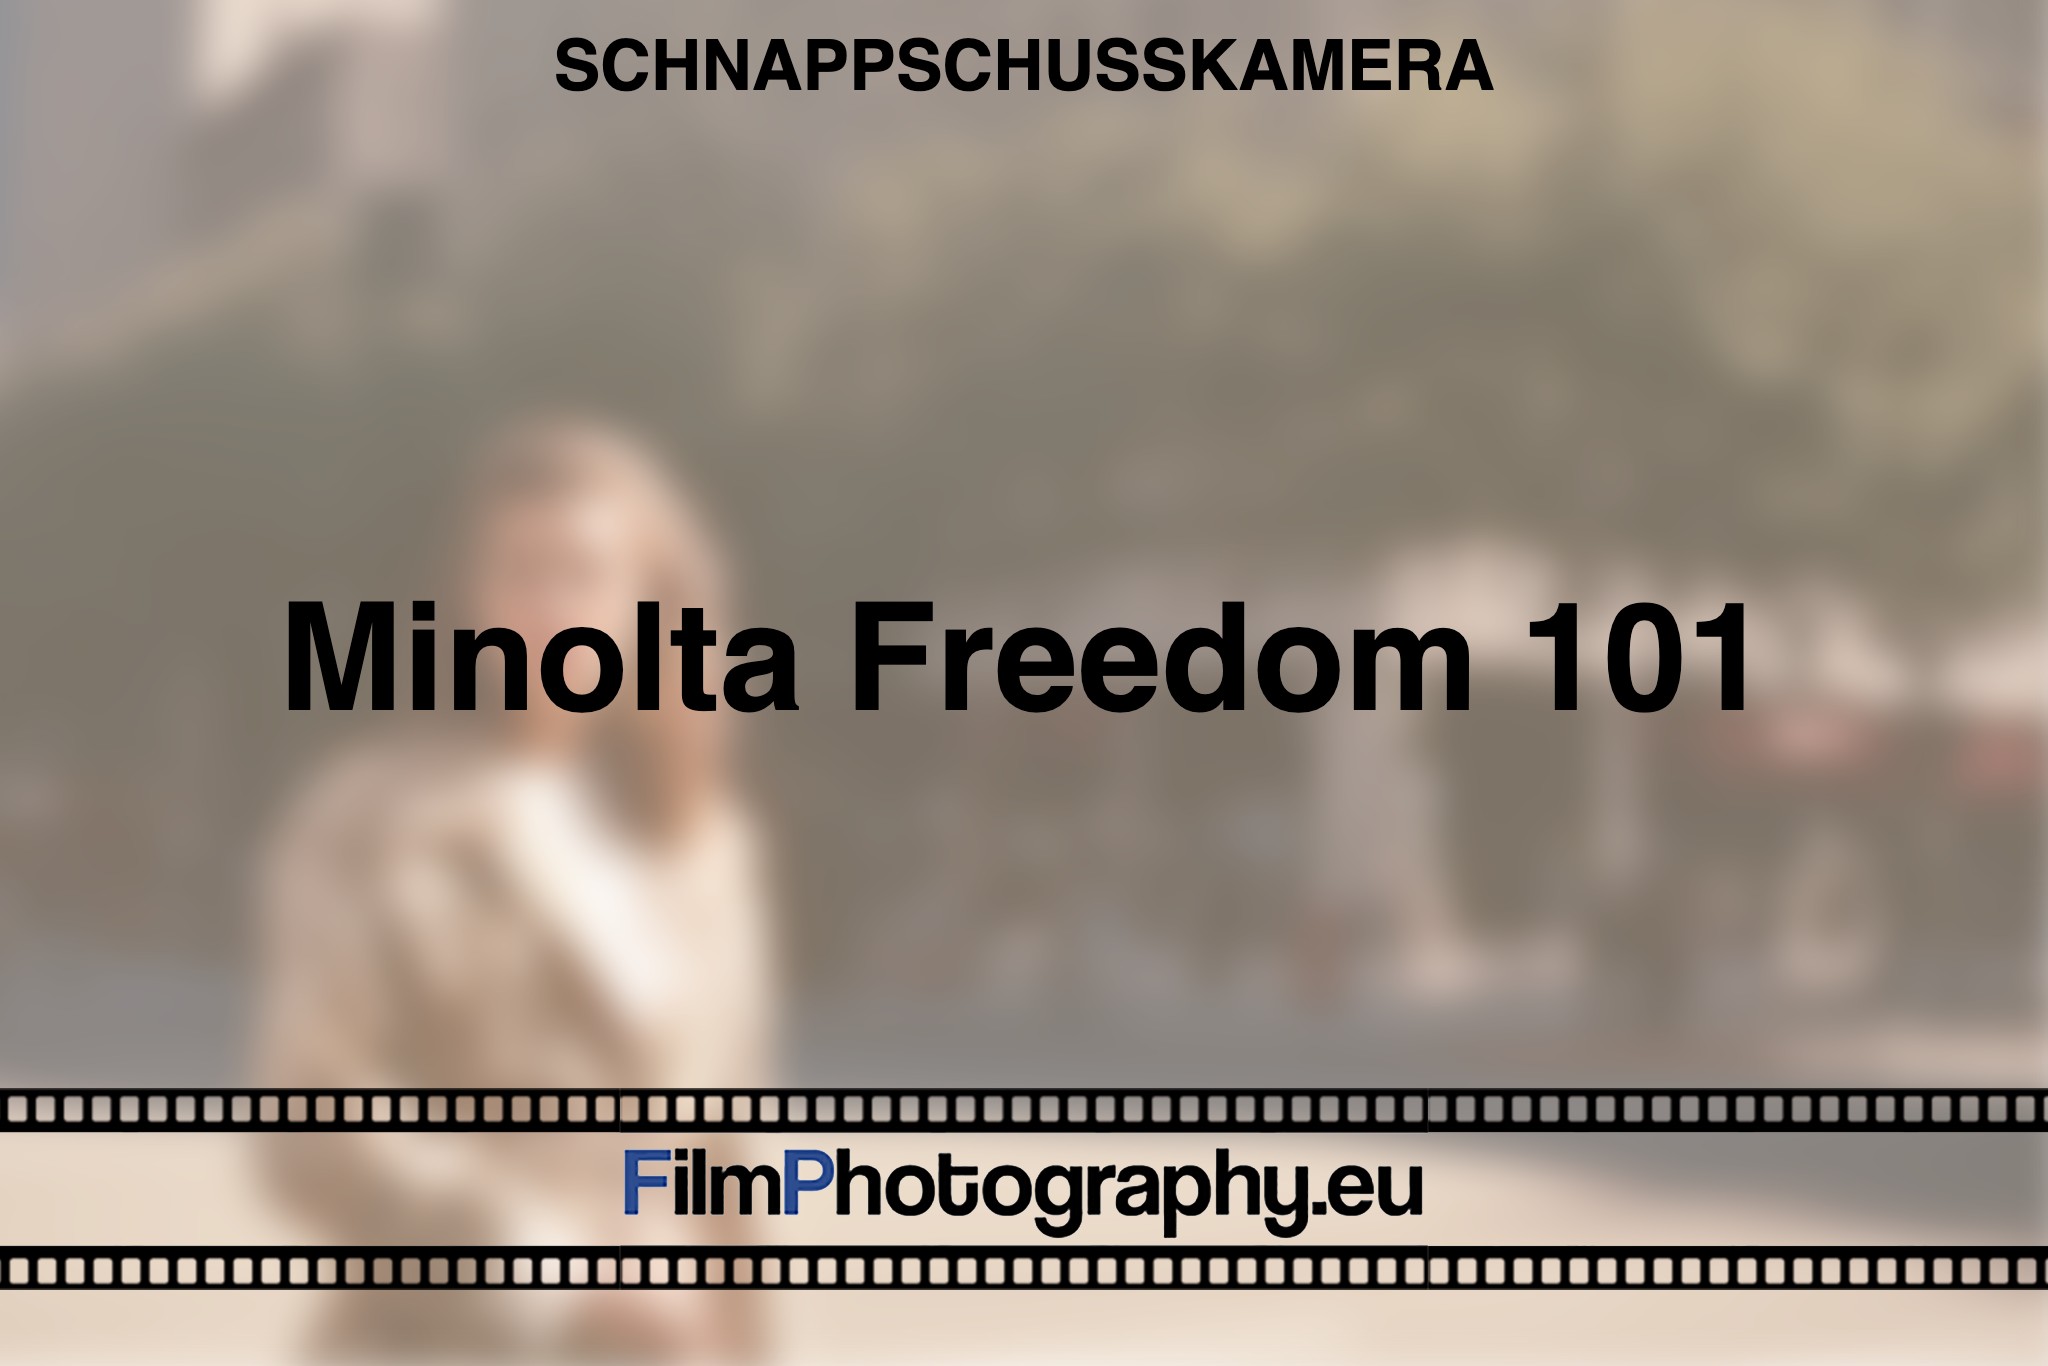 minolta-freedom-101-schnappschusskamera-bnv